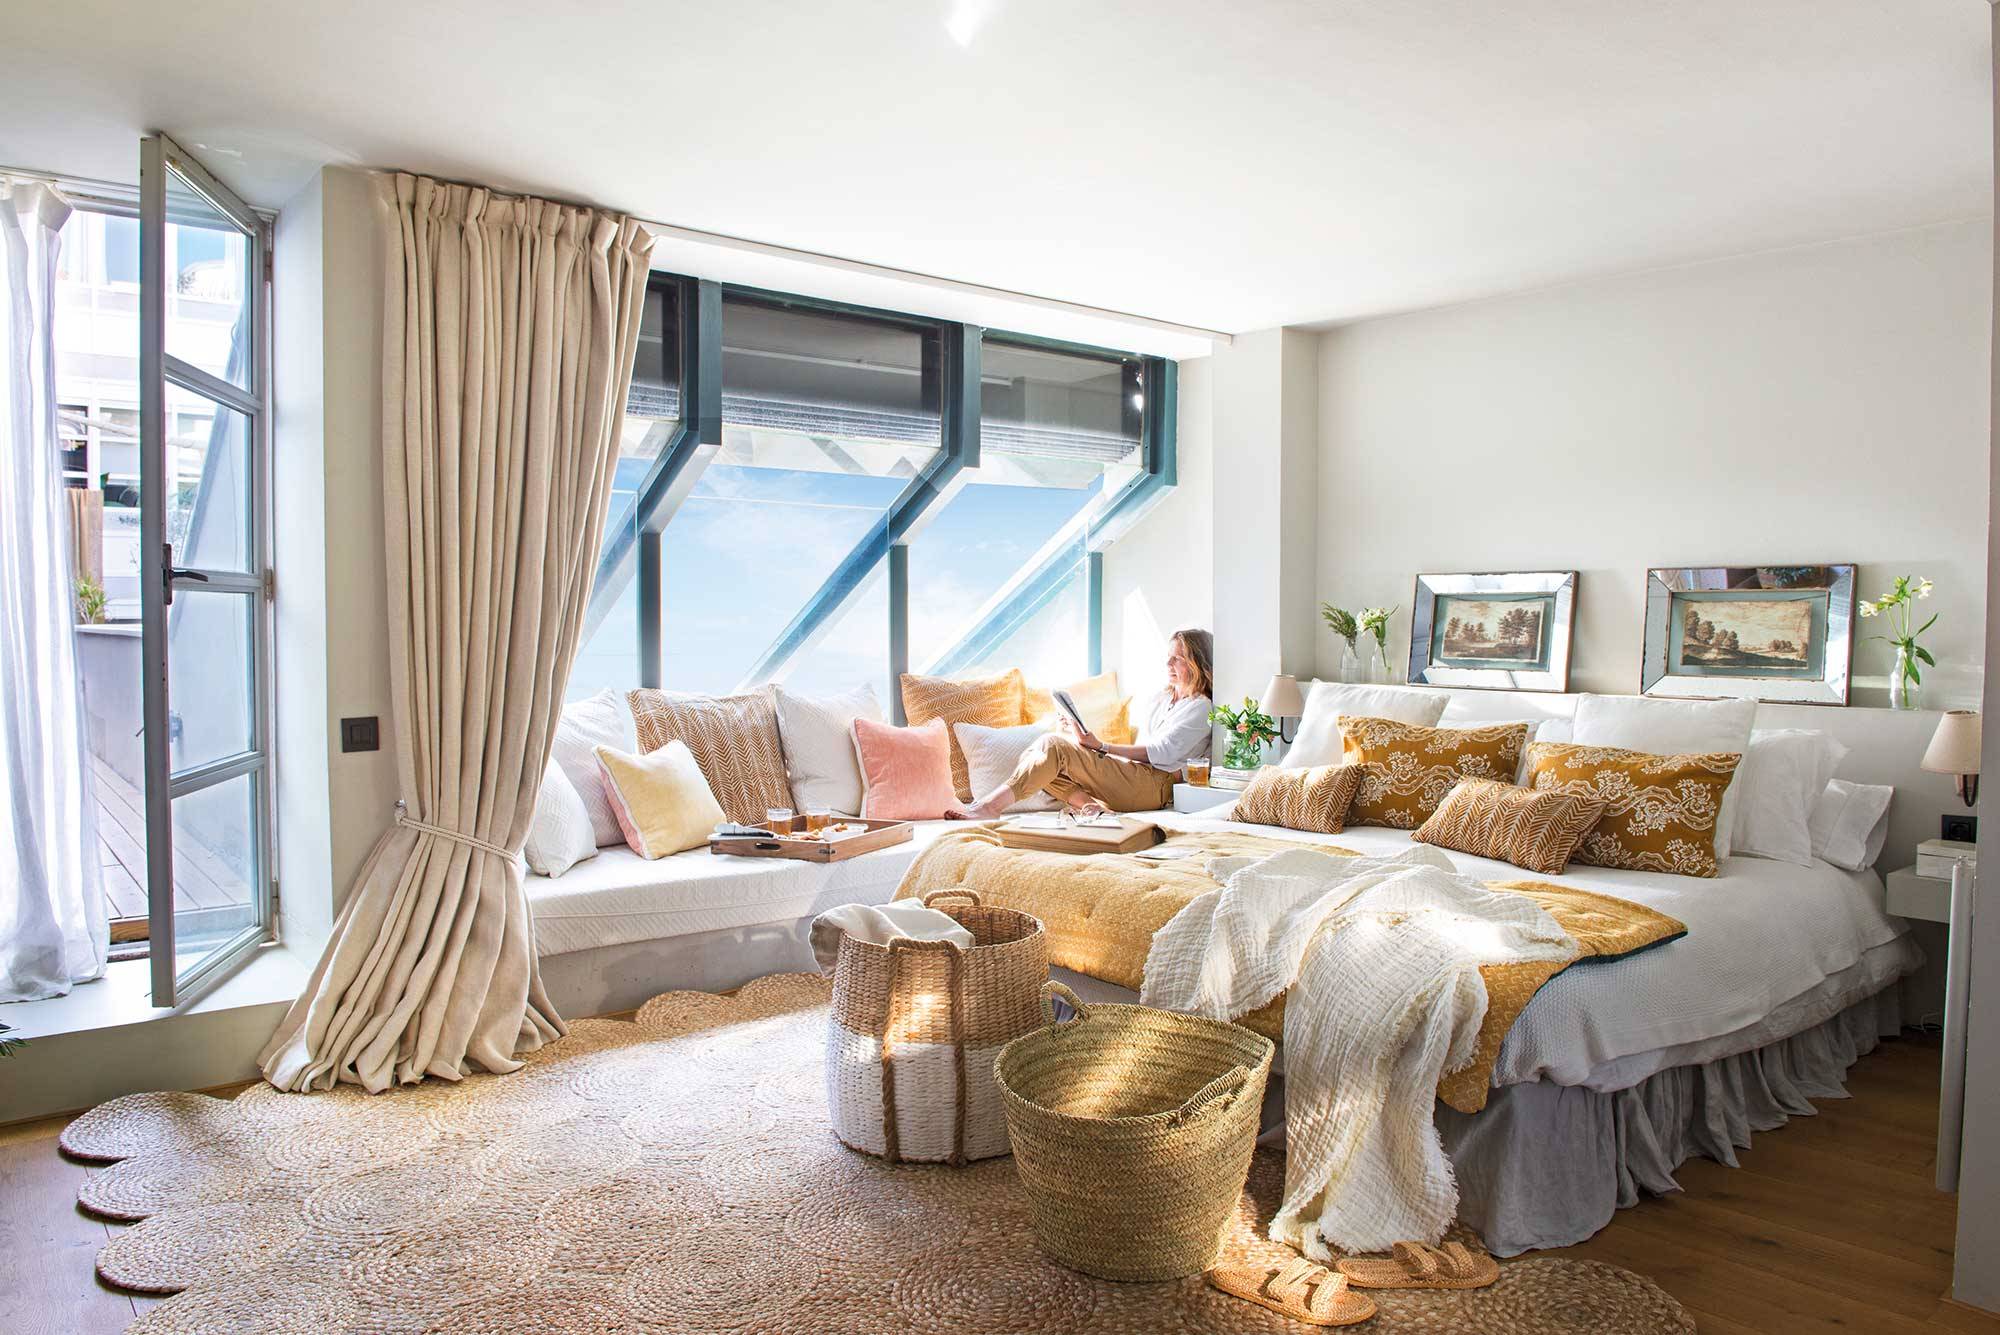 Dormitorio moderno con gran ventanal y banco a modo de chill out. 